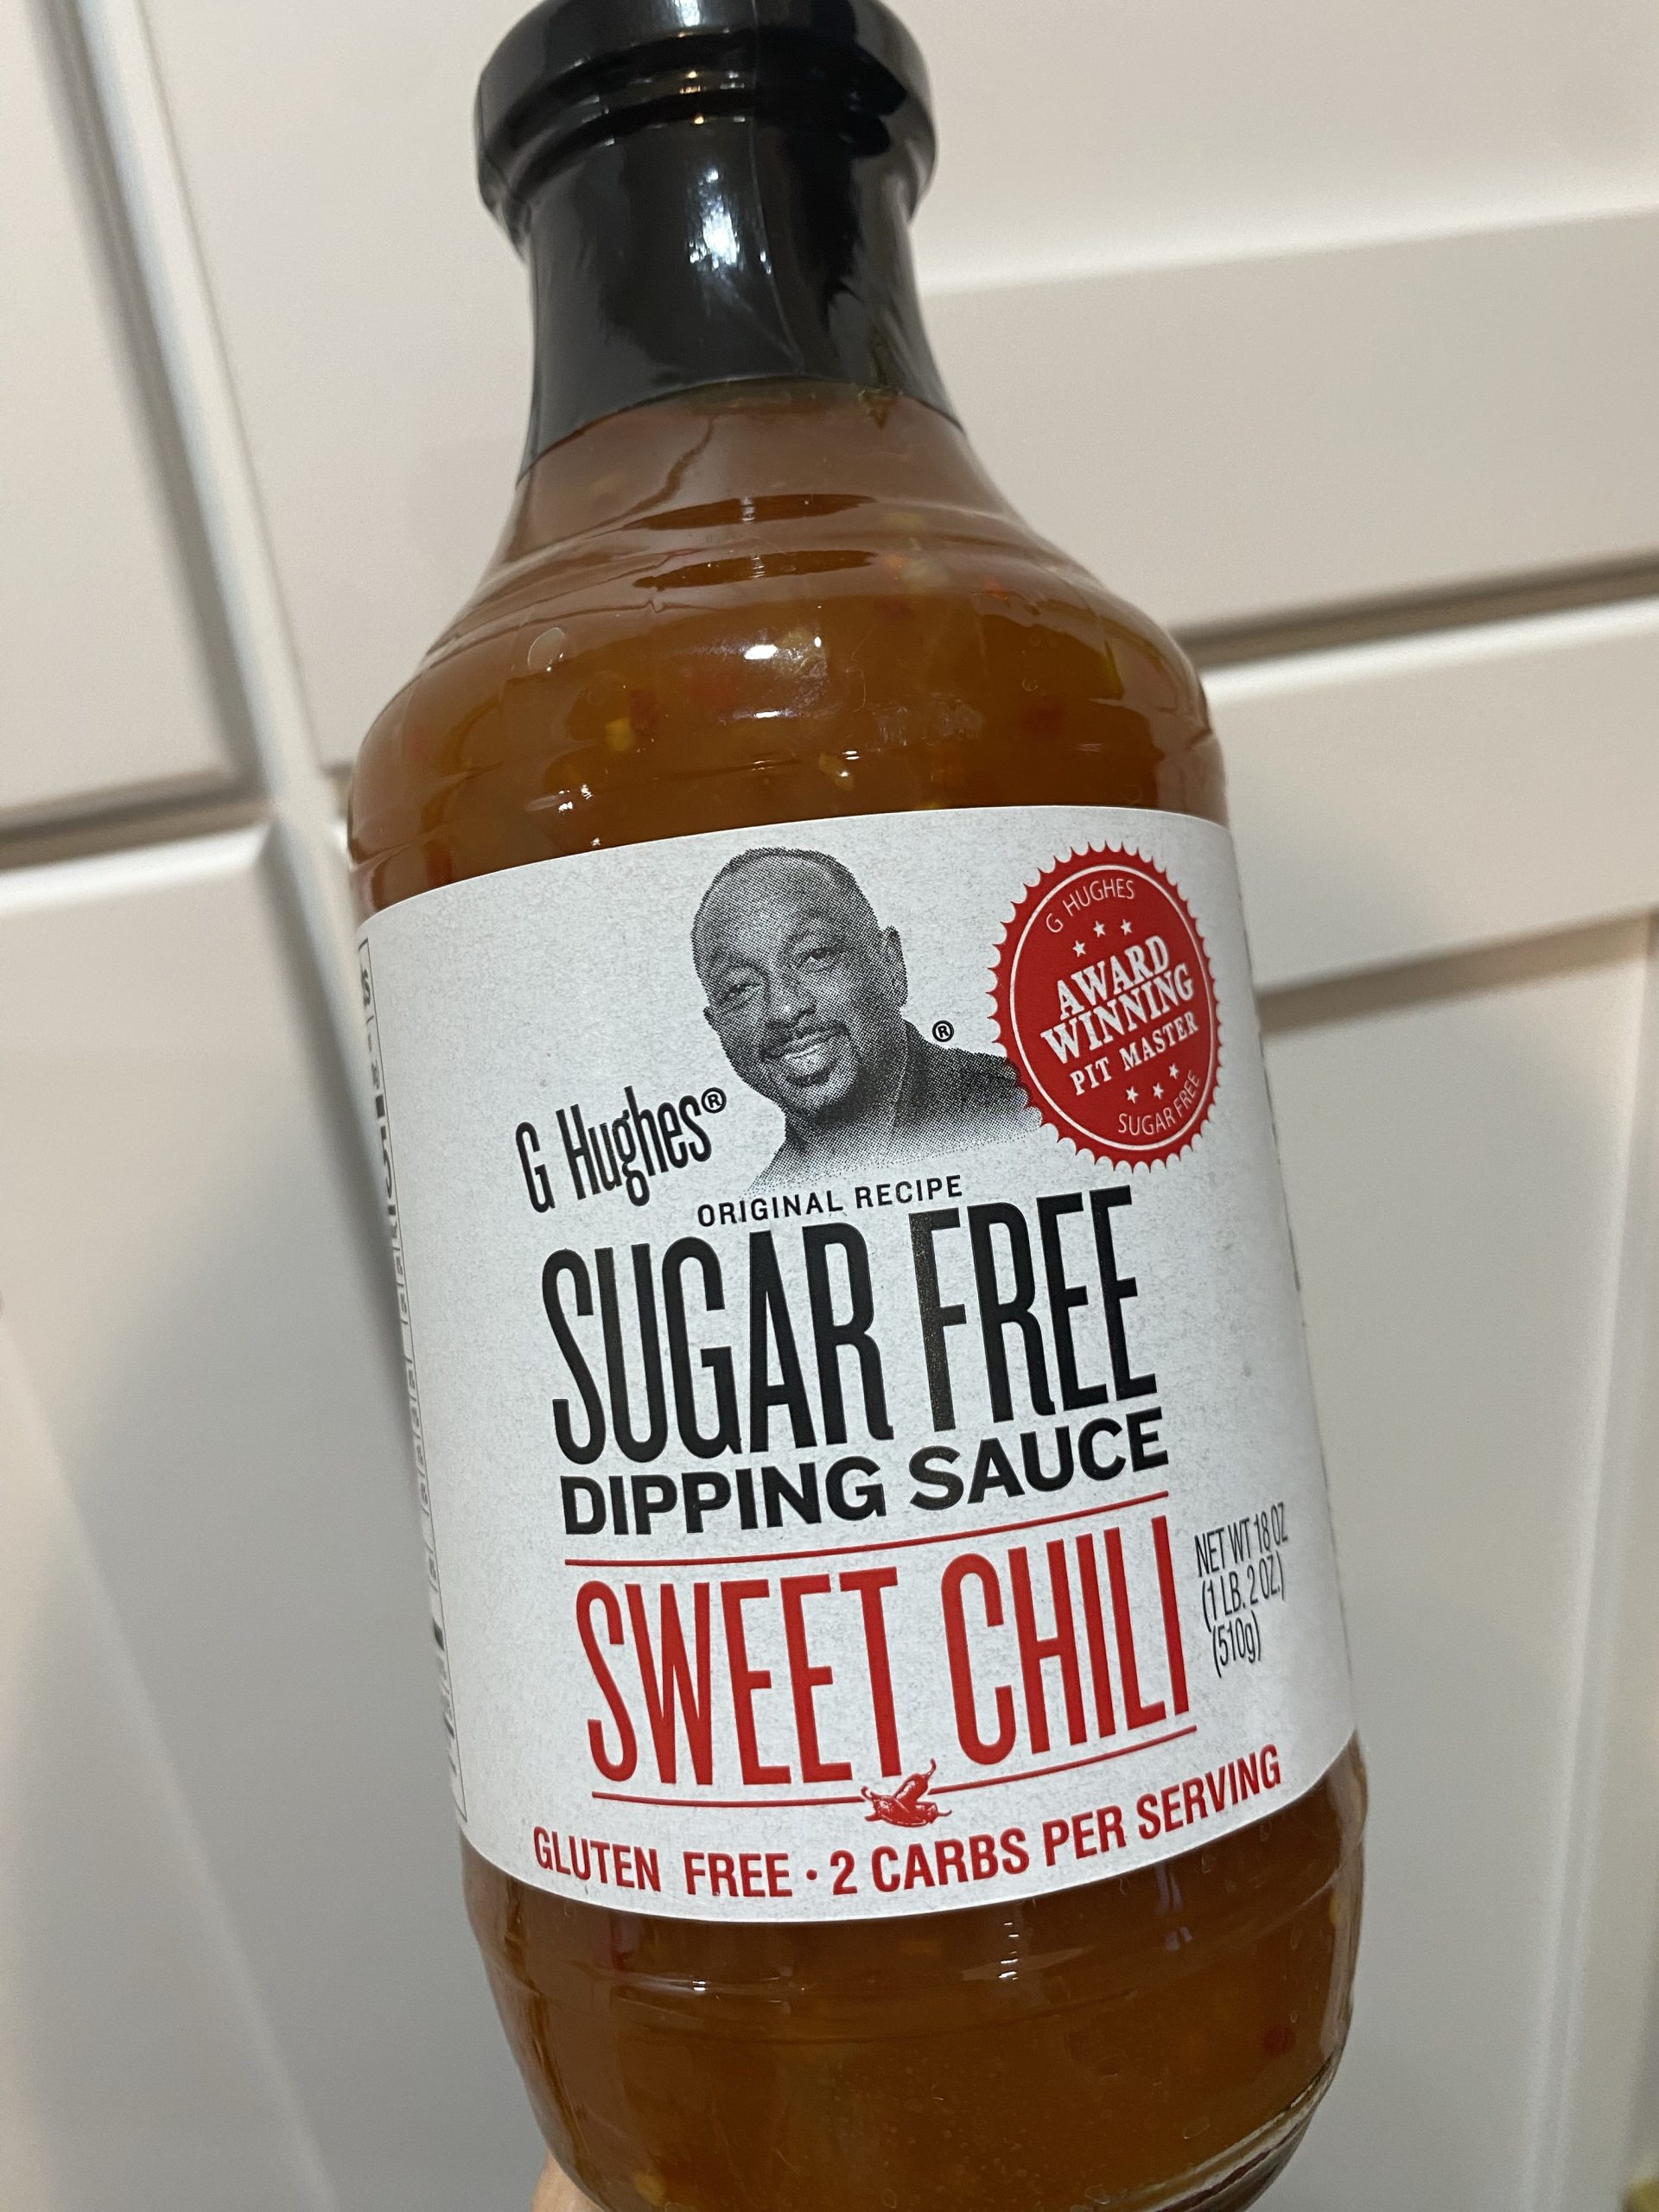 A bottle of sugar free sweet chili sauce.  